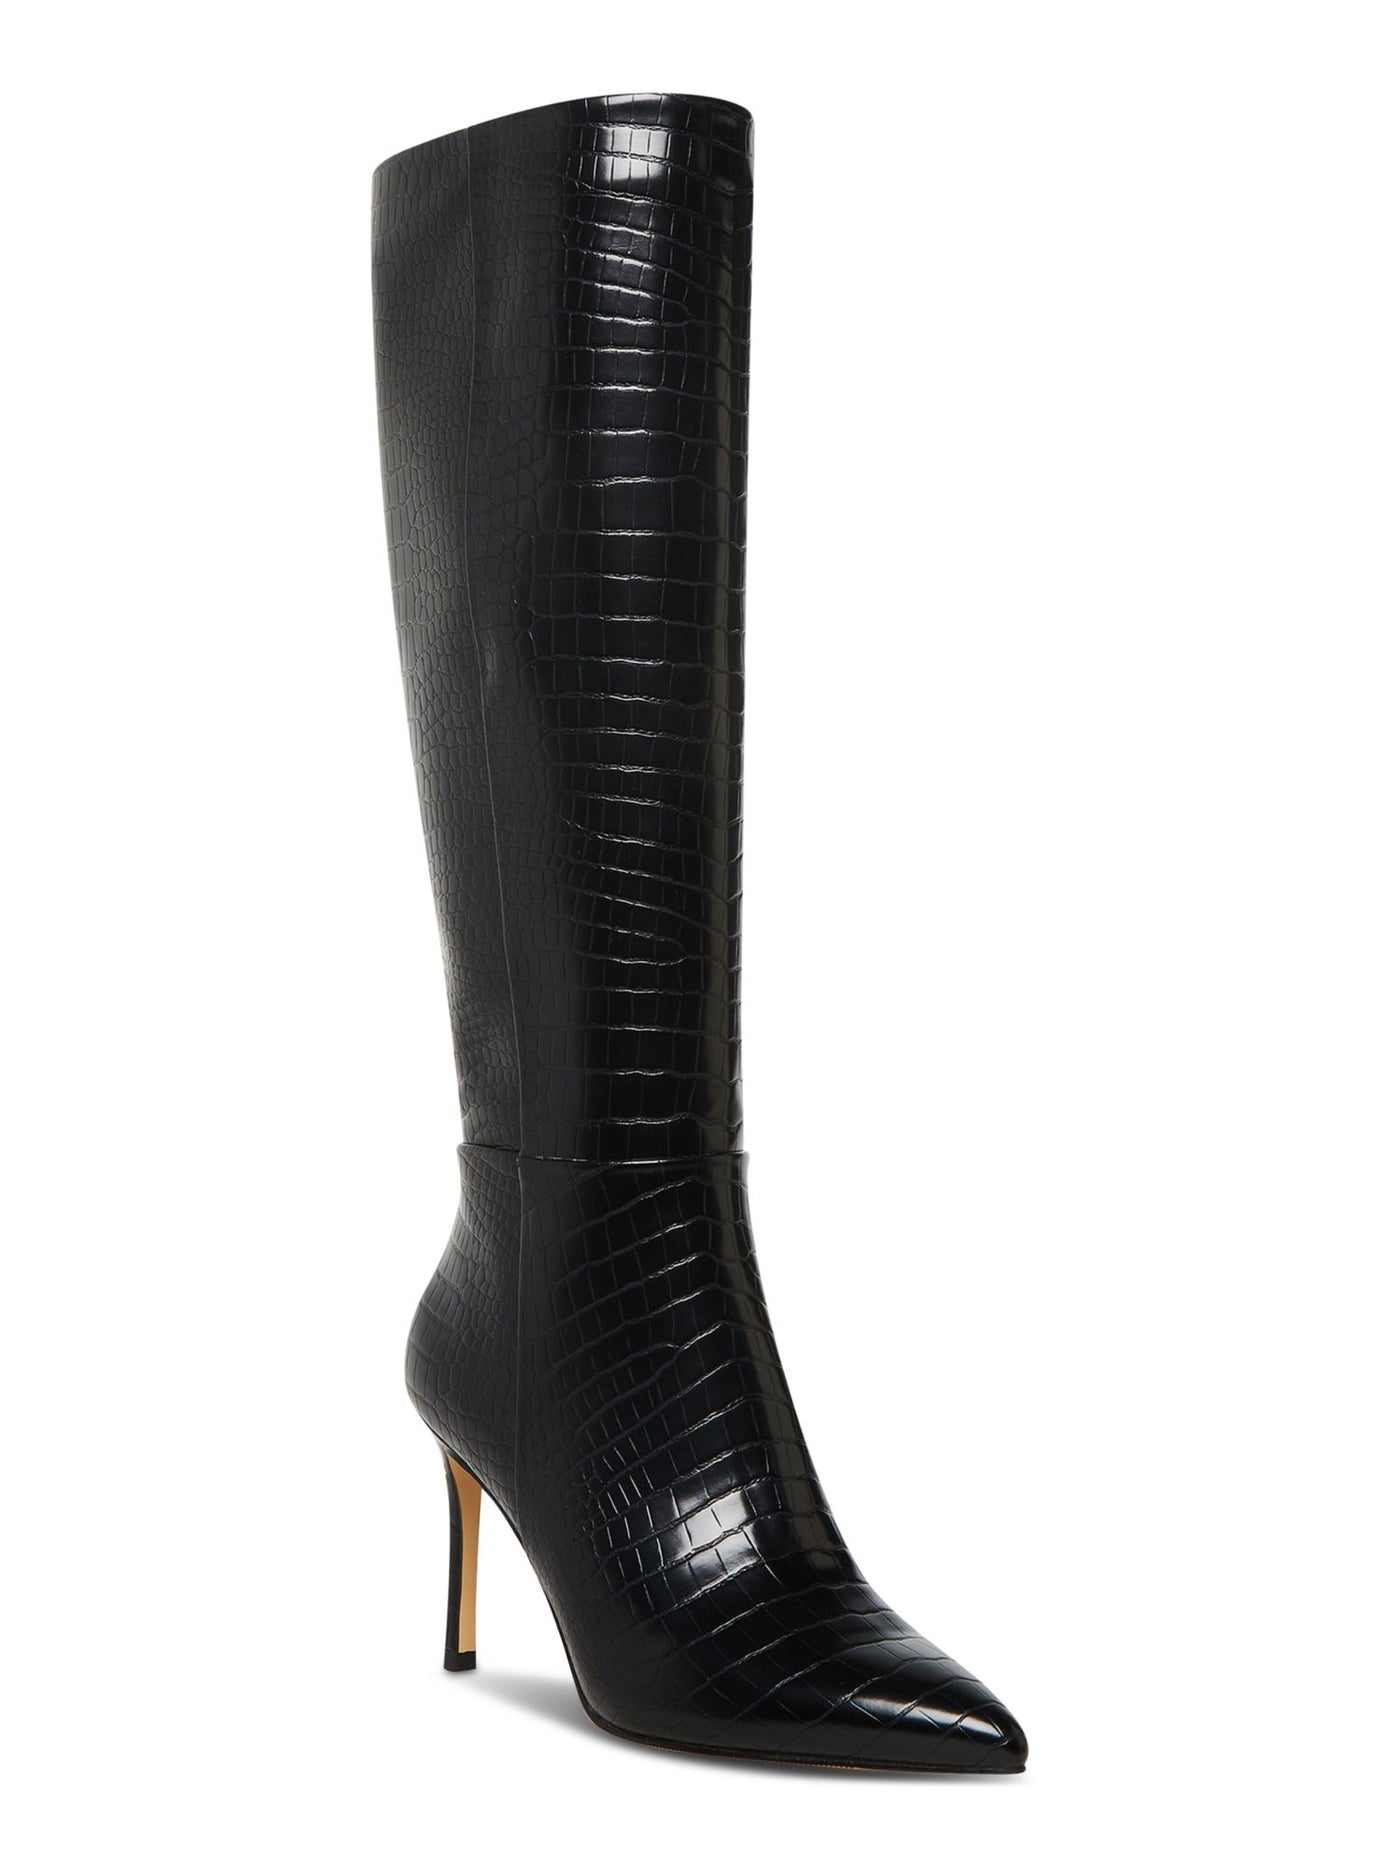 MADDEN GIRL Womens Black Animal Print Crocodile Padded Chantelle Pointed Toe Stiletto Zip-Up Dress Boots 11 M